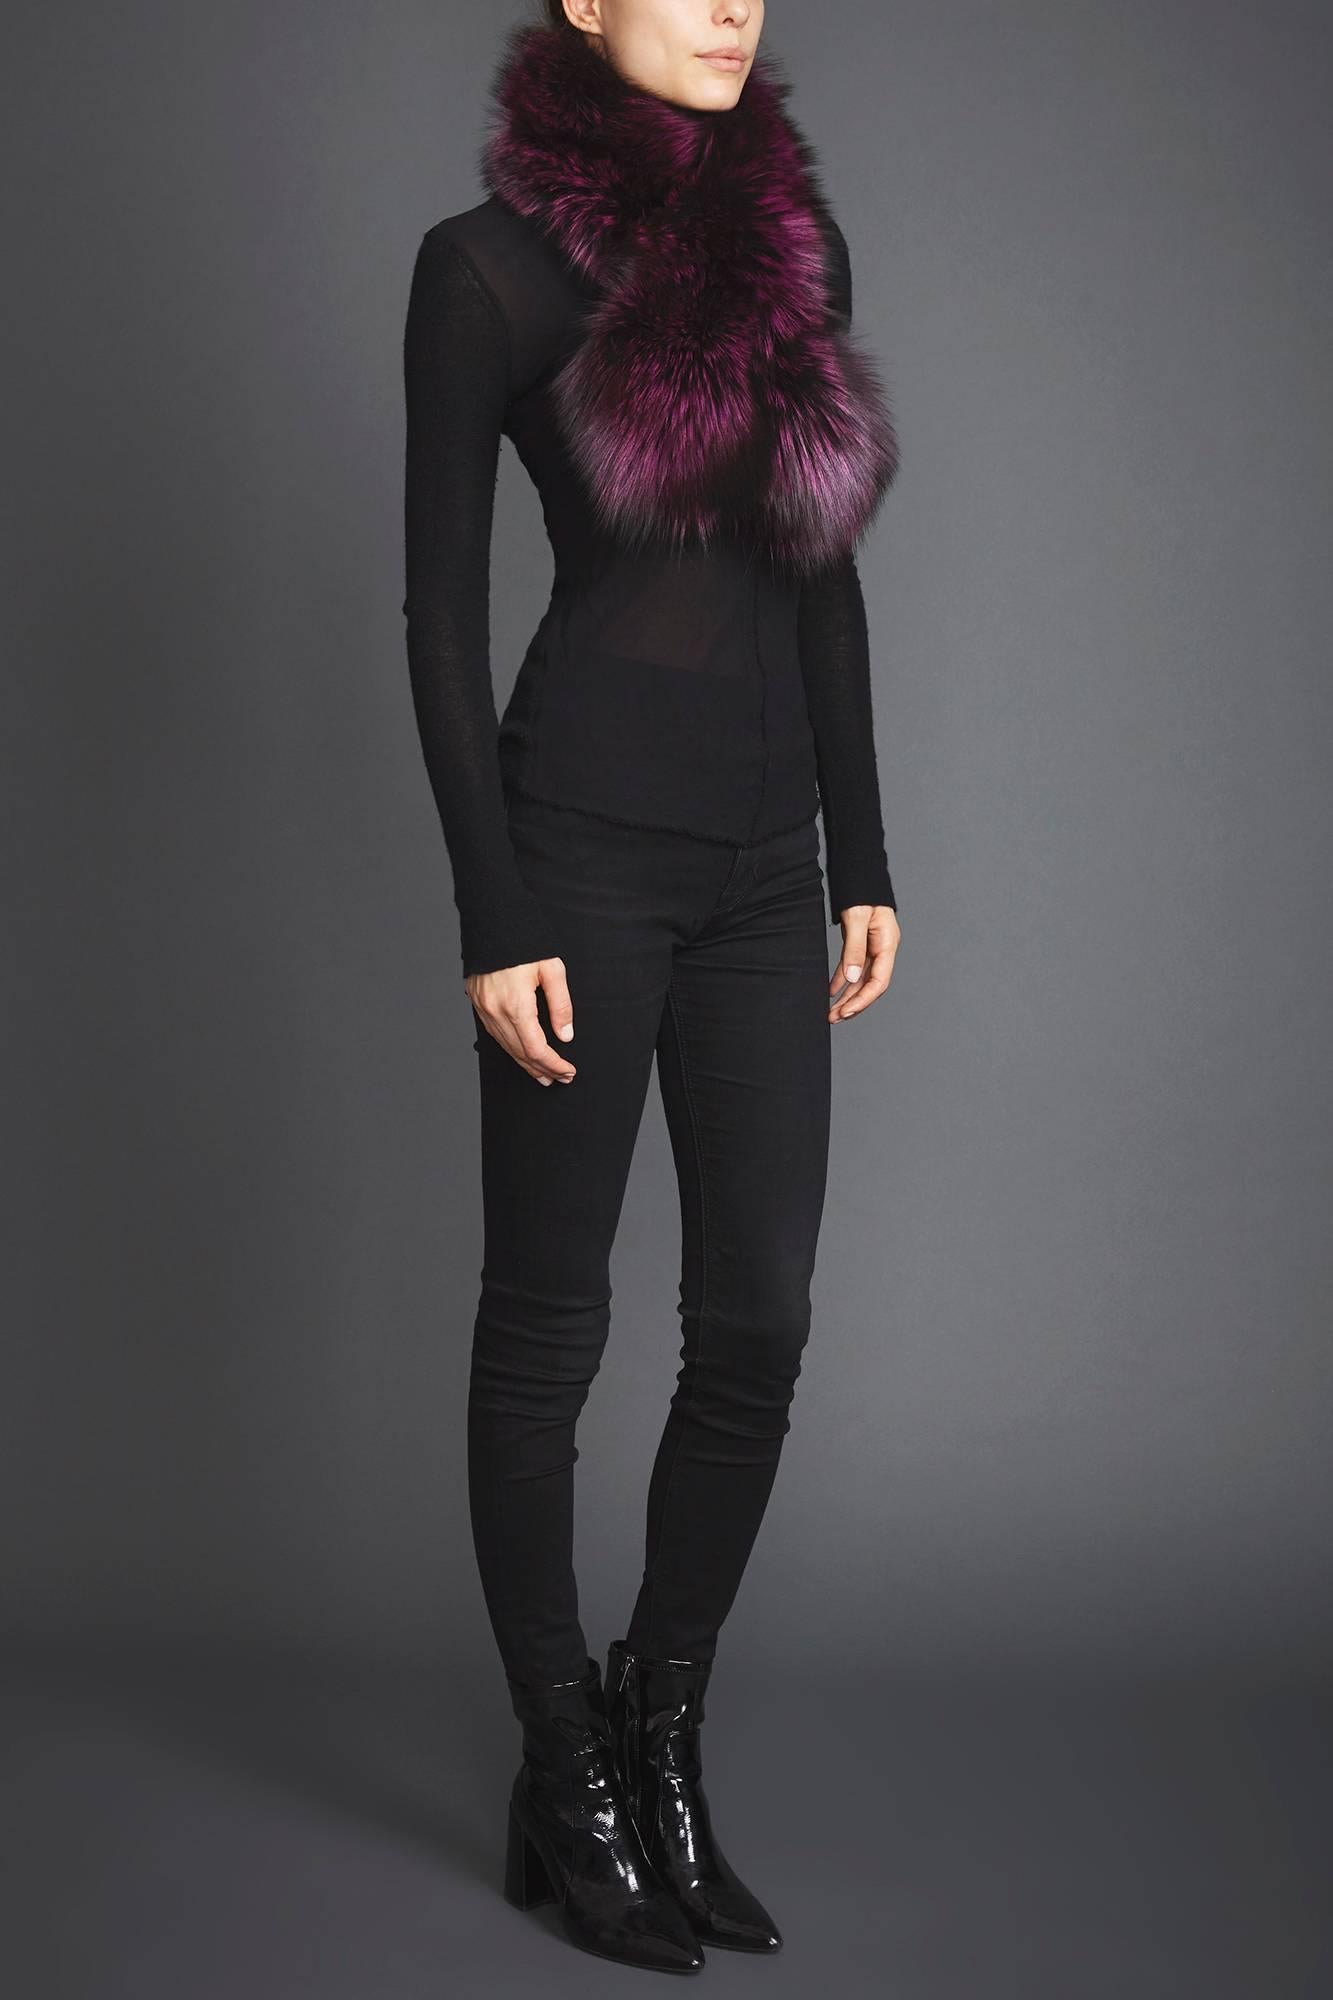 Black Verheyen London Lapel Cross-through Collar Stole in Purple Fox Fur - Brand New